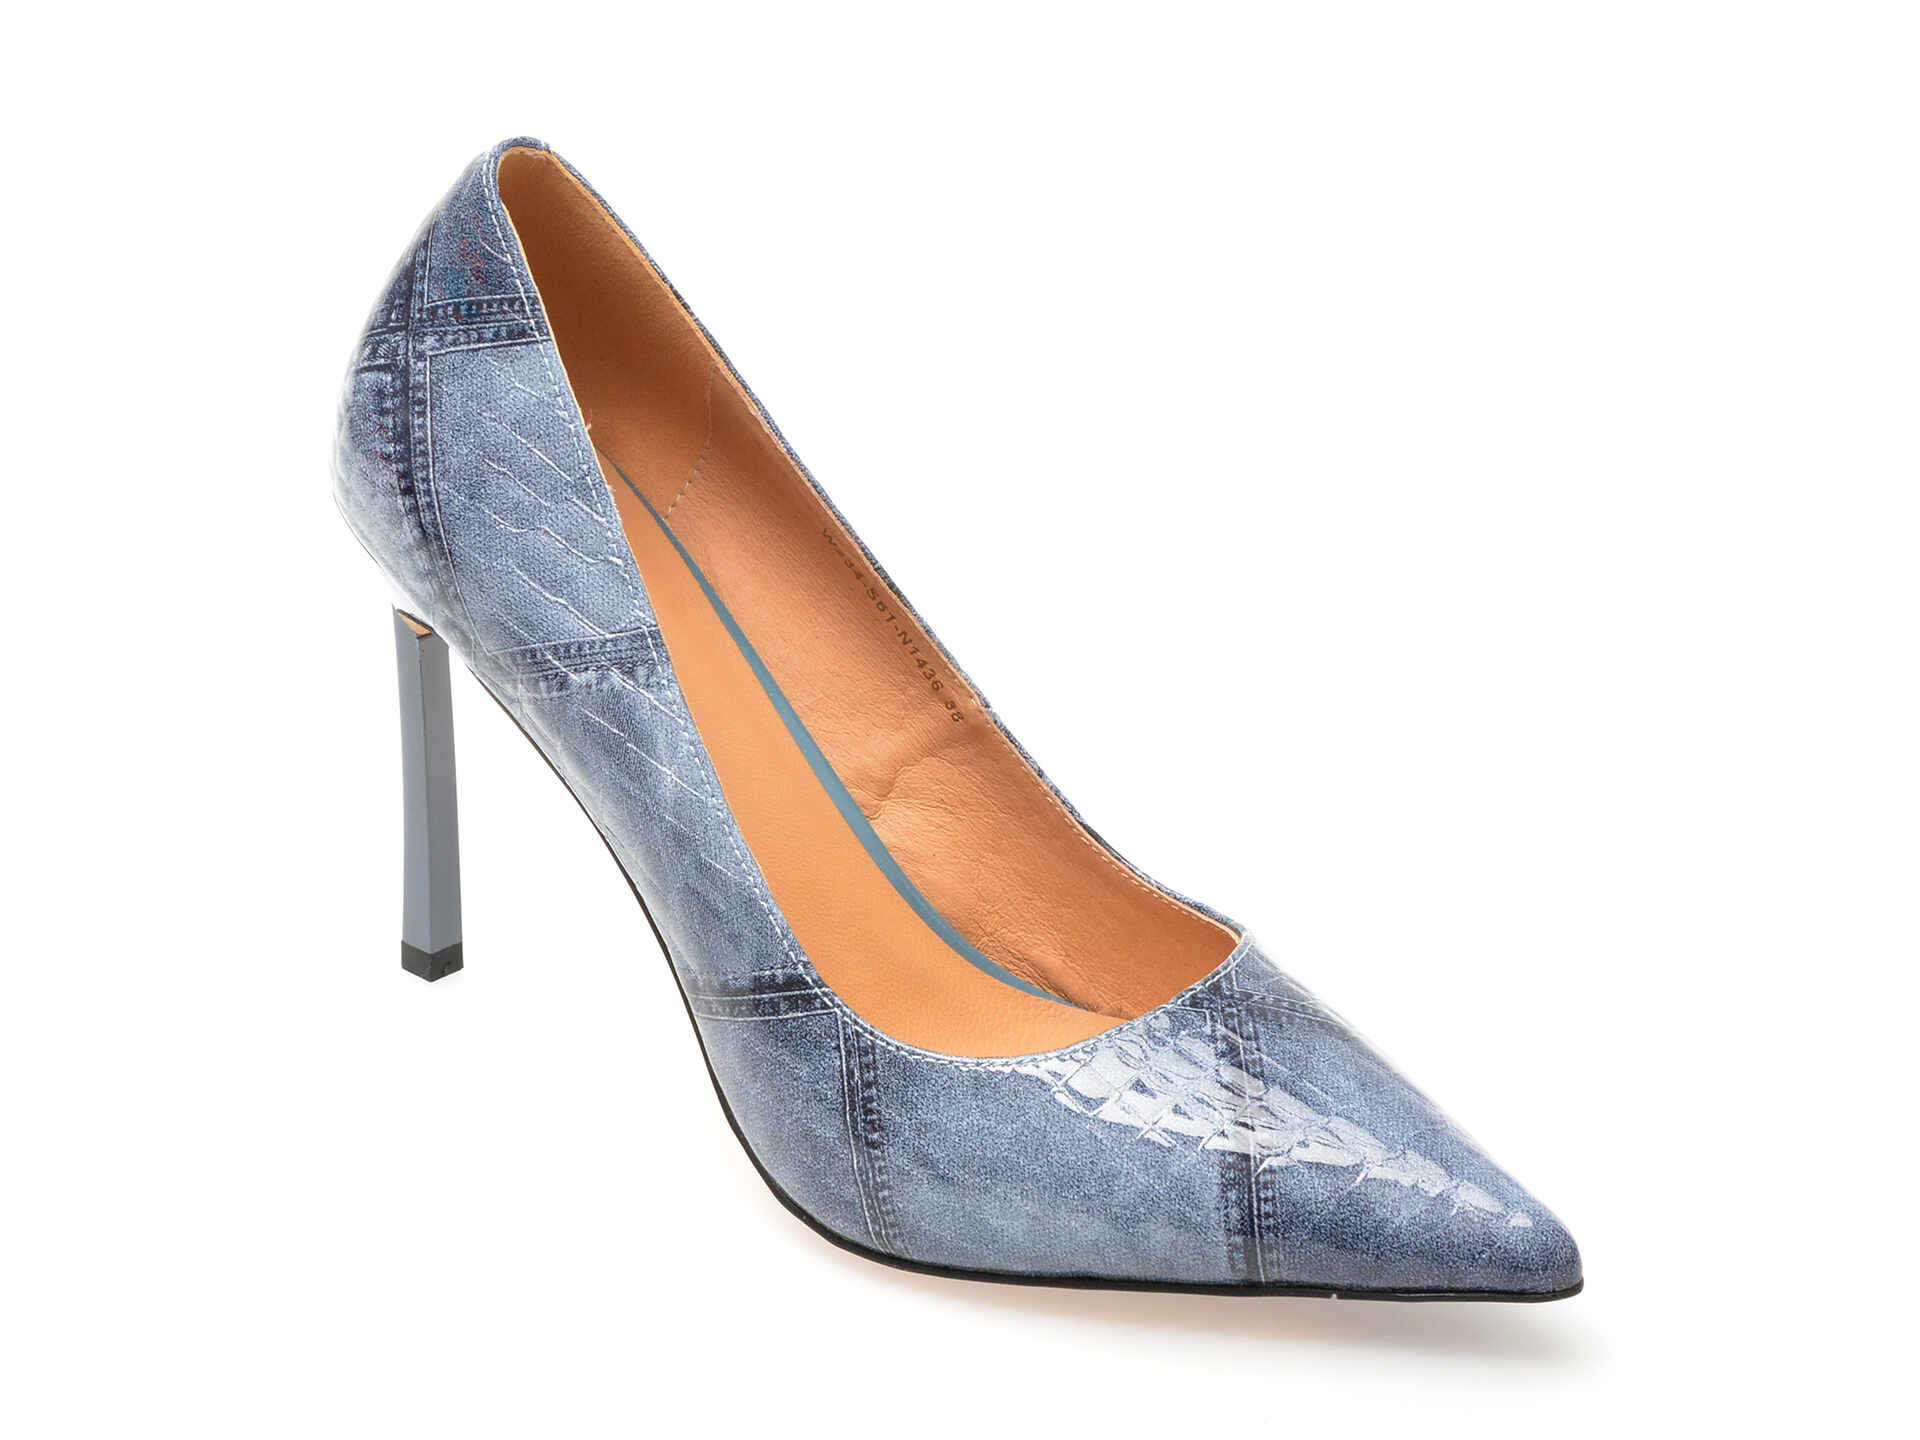 Pantofi eleganti EPICA albastri, S61, din piele naturala lacuita